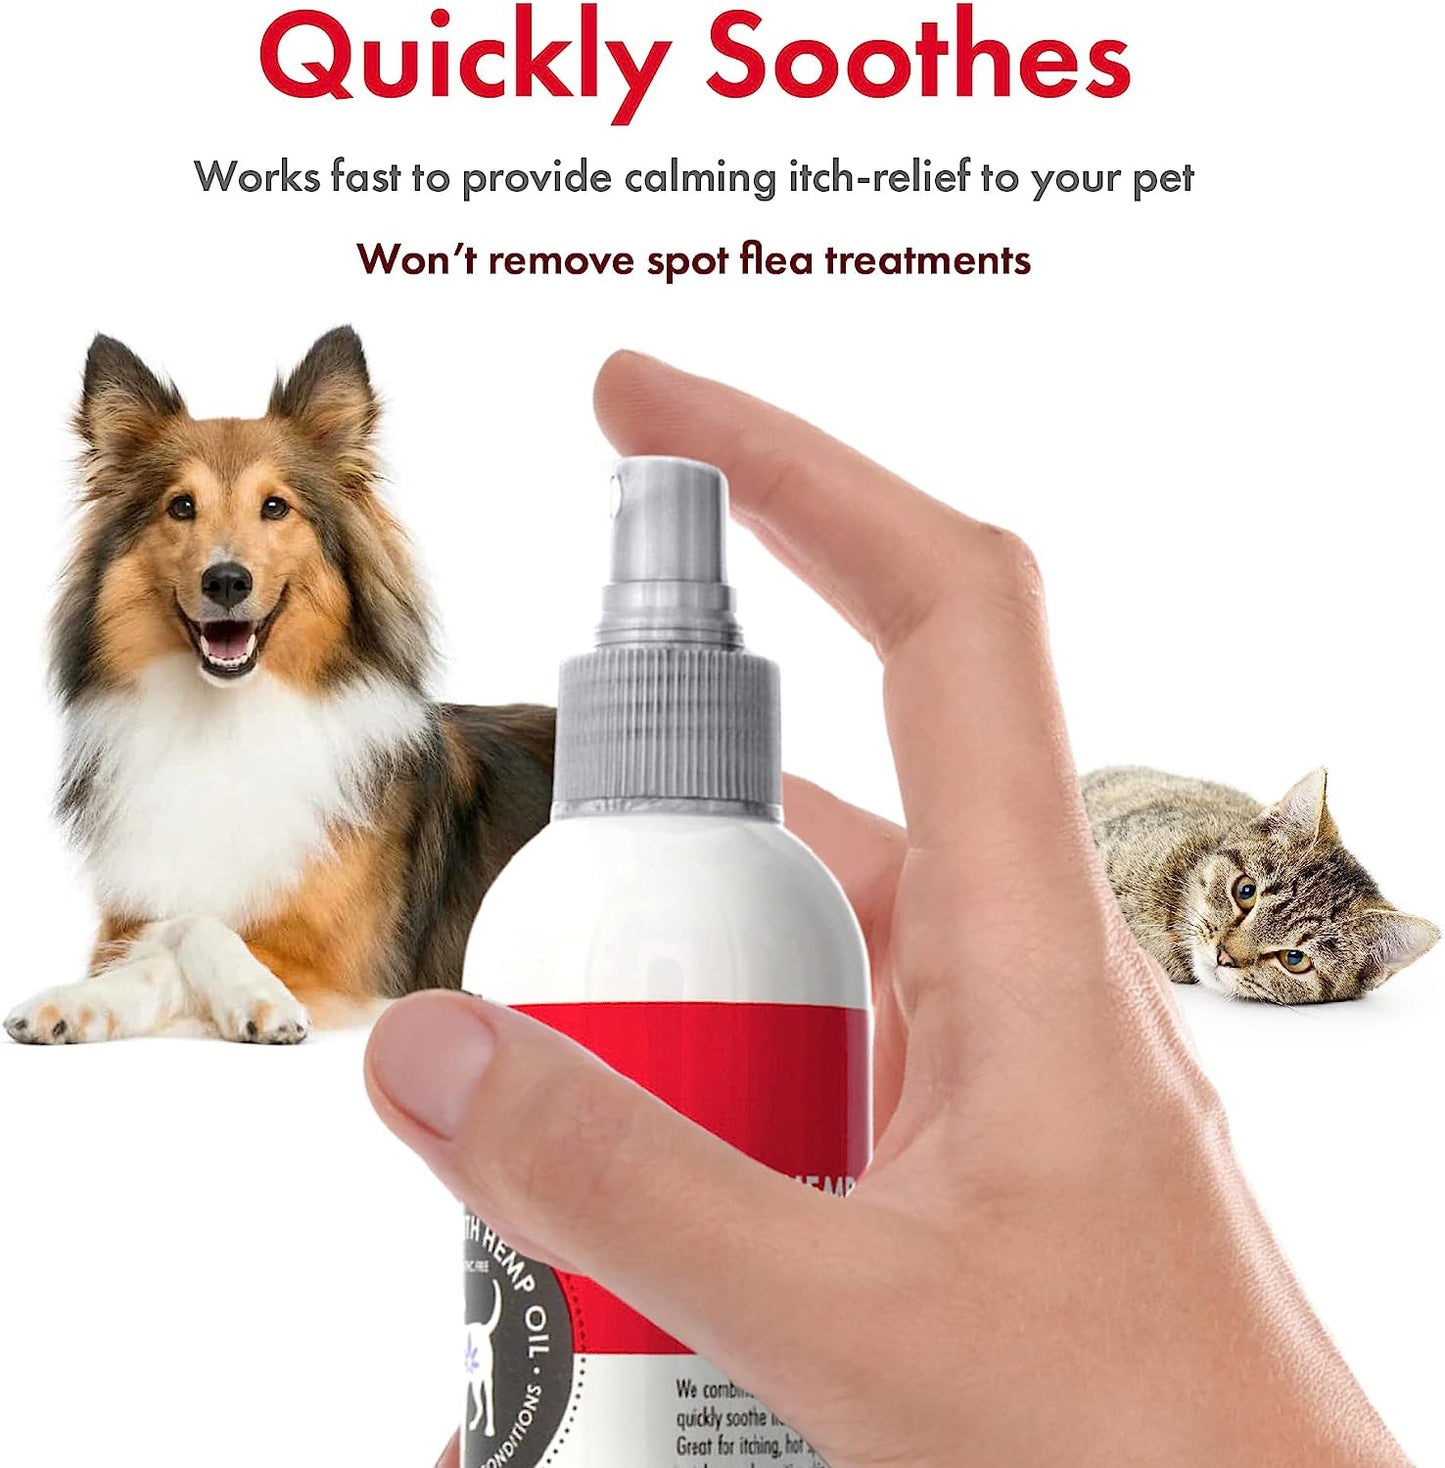 Petkin Hemp Itch Spray For Dogs & Cats 237ml